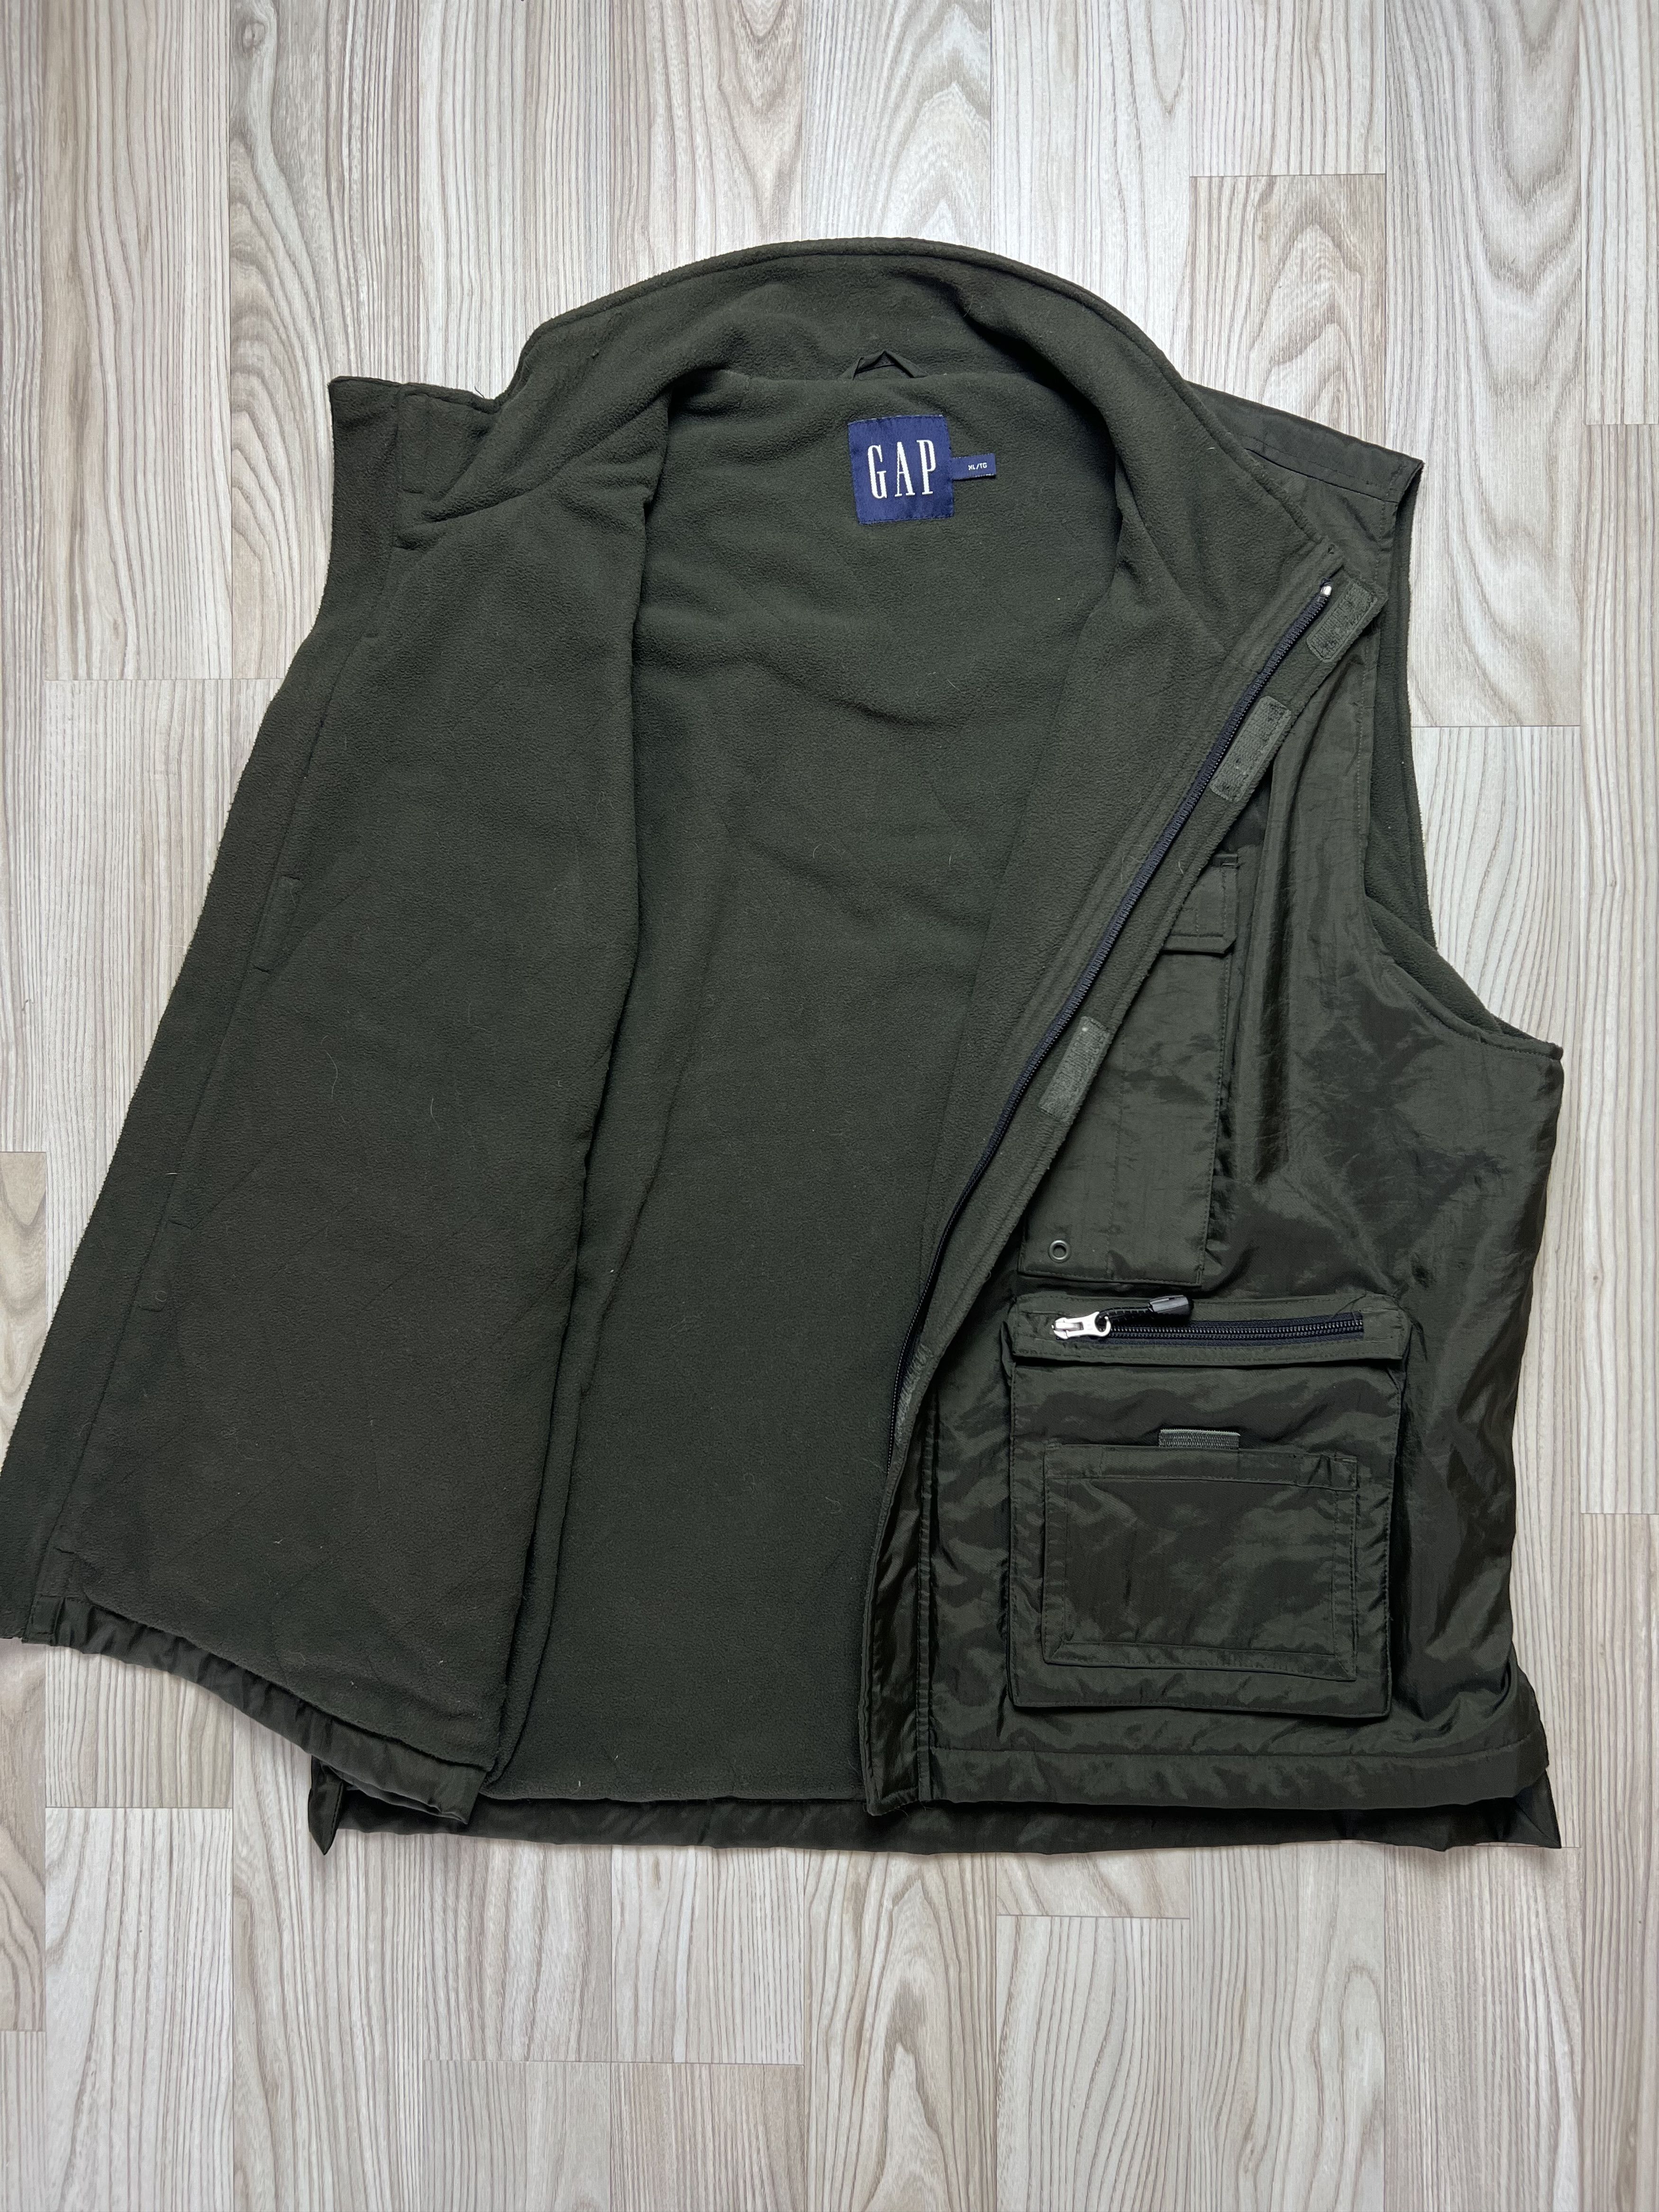 Gap Gap tactical vest with Fleece interior nad Lots of pockets